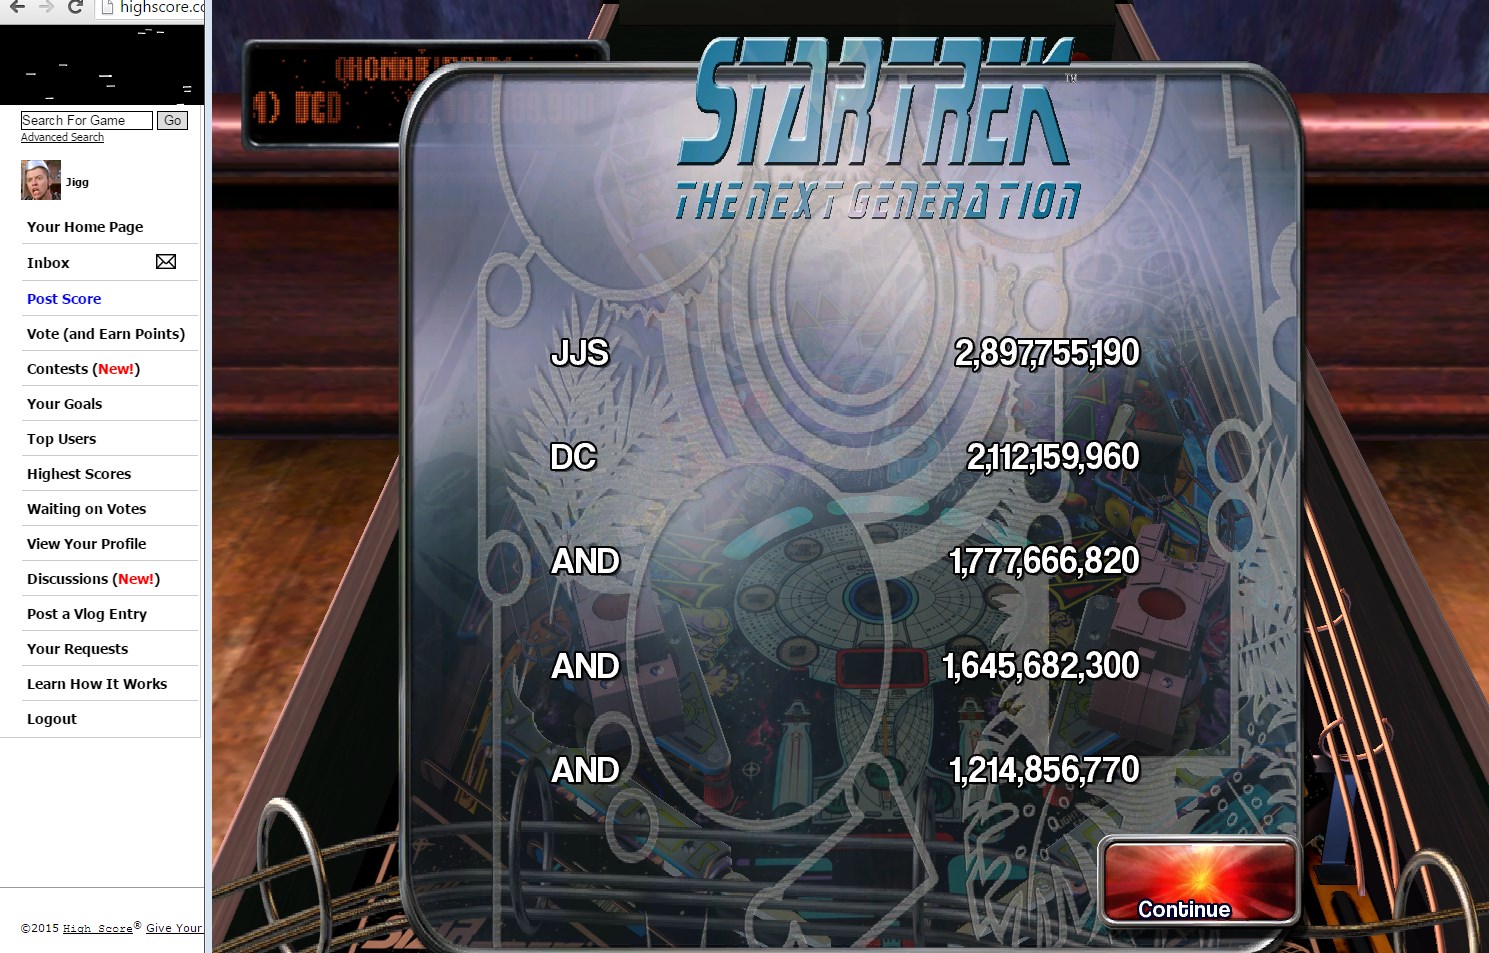 Jigg: Pinball Arcade: Star Trek: The Next Generation (PC) 1,777,666,820 points on 2015-05-02 10:53:47